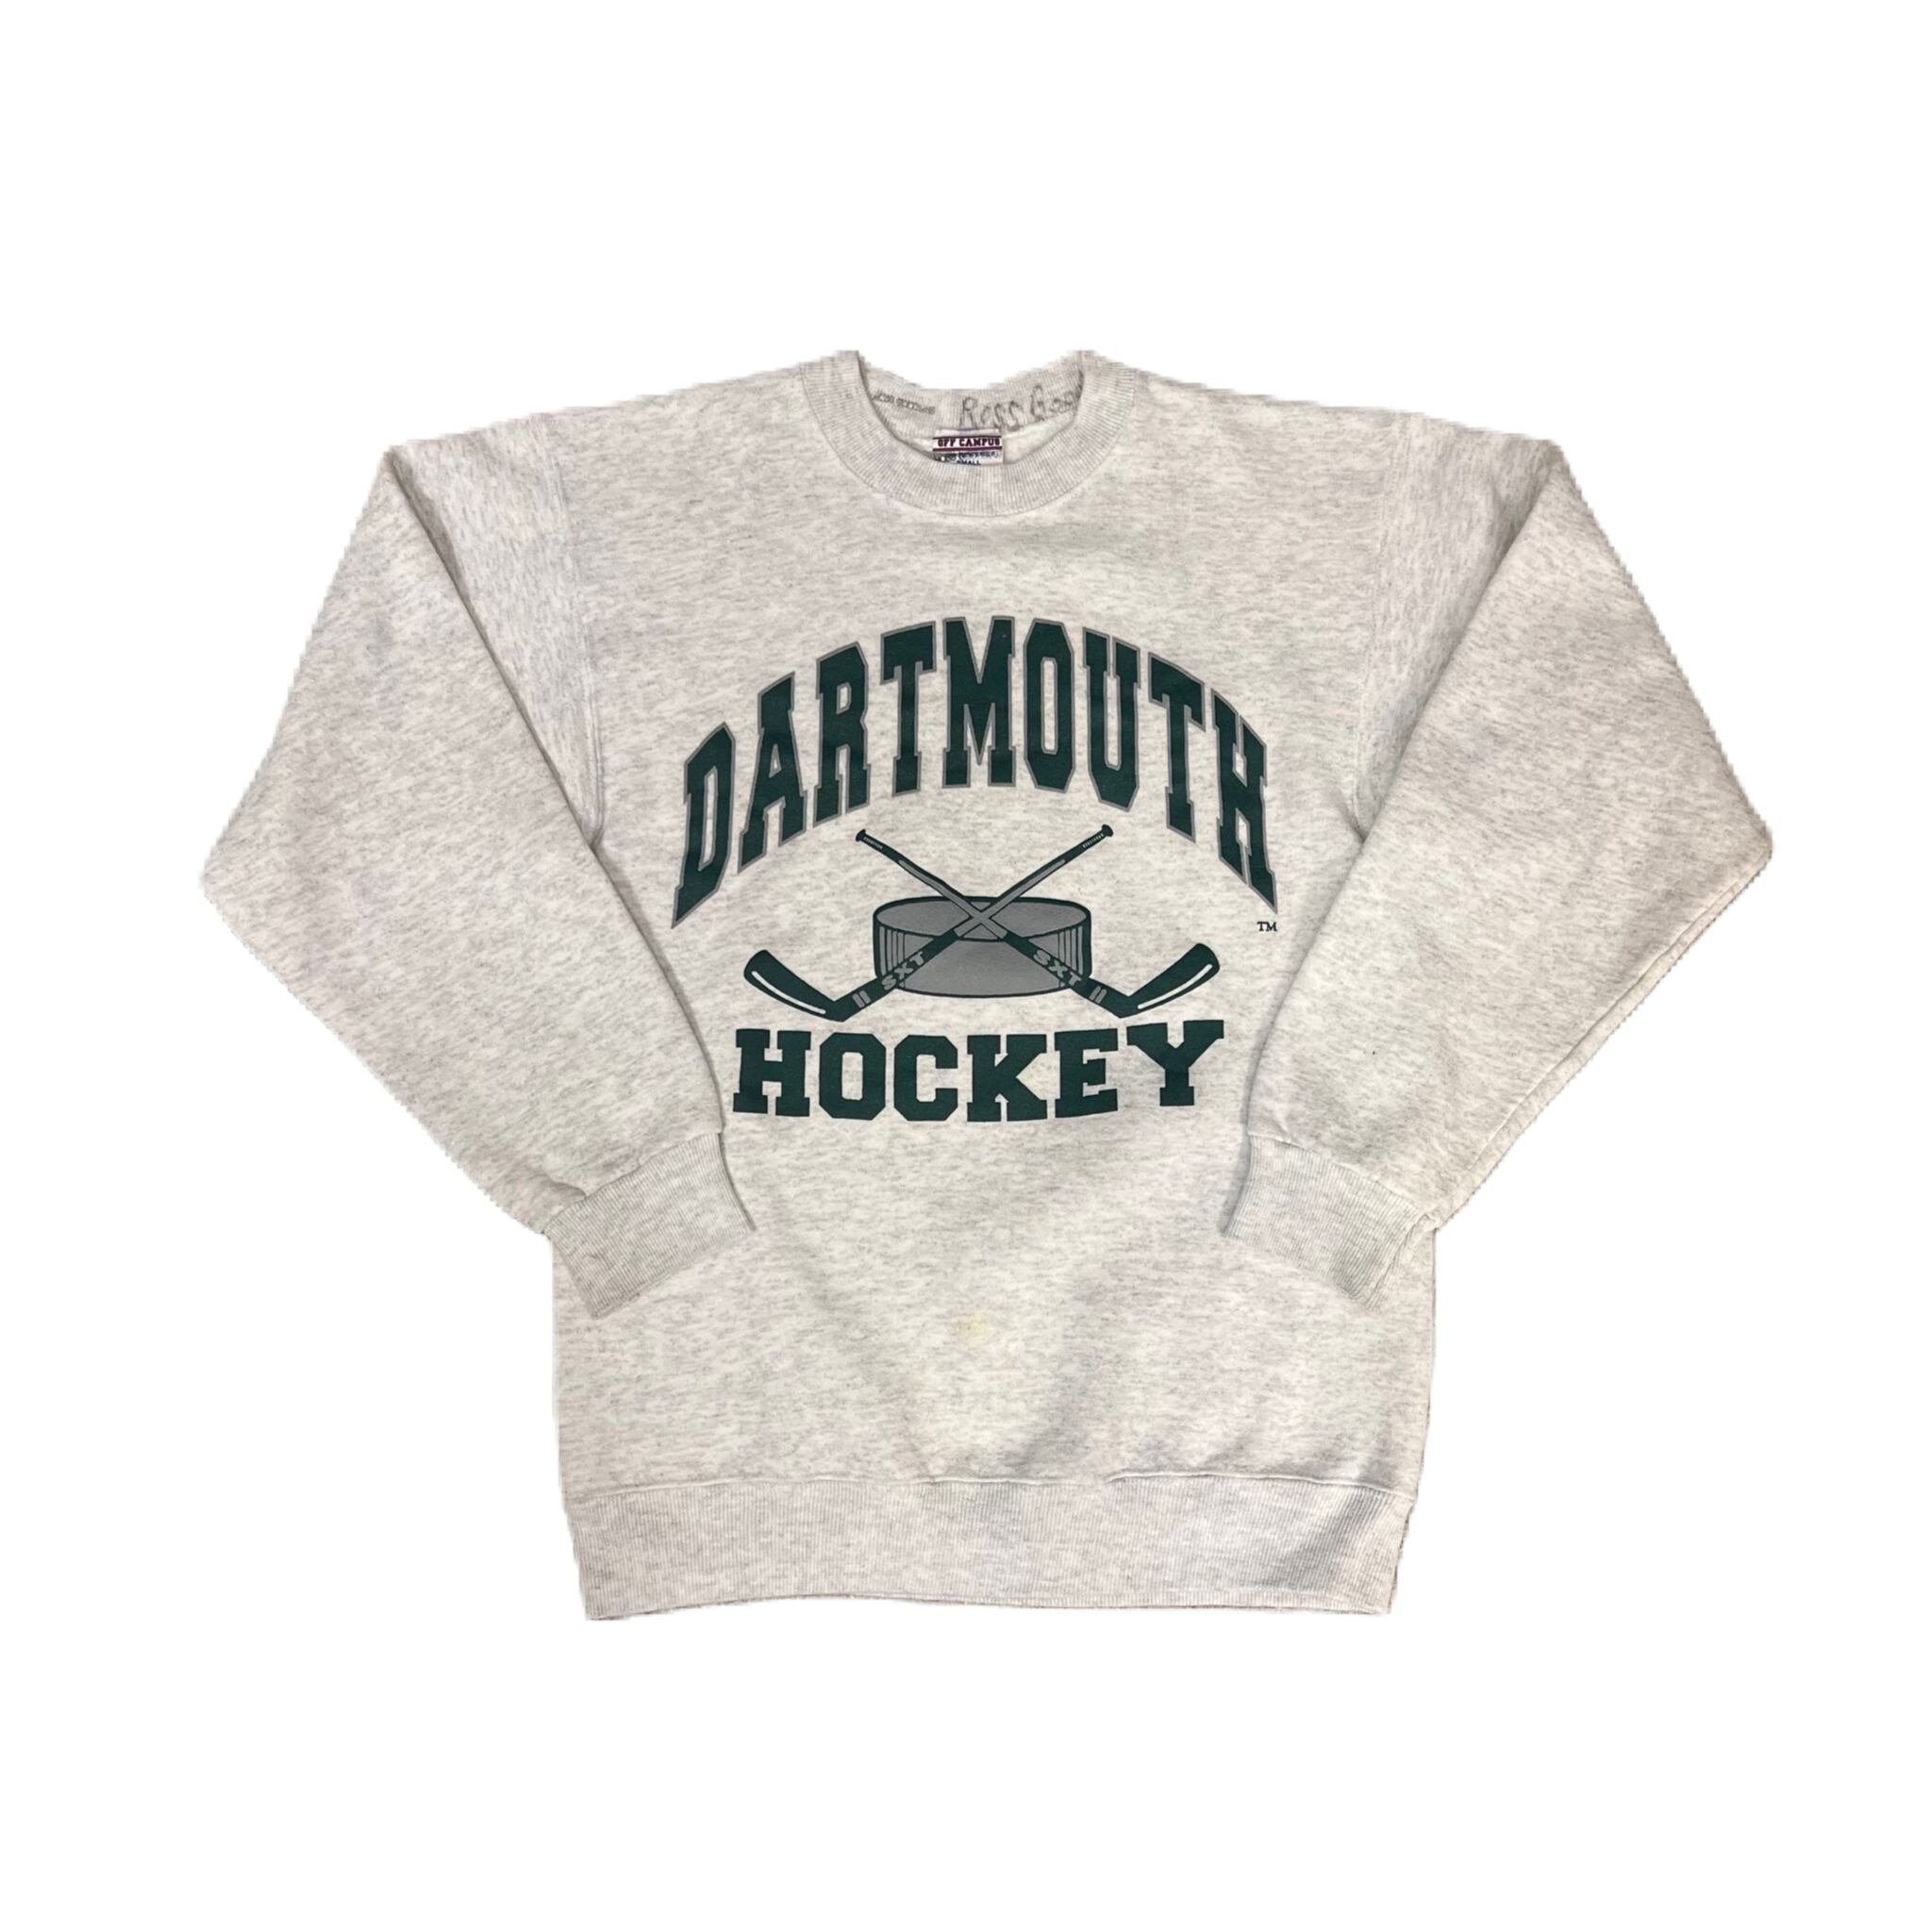 Dartmouth Hockey Sweat ¥6,900+tax